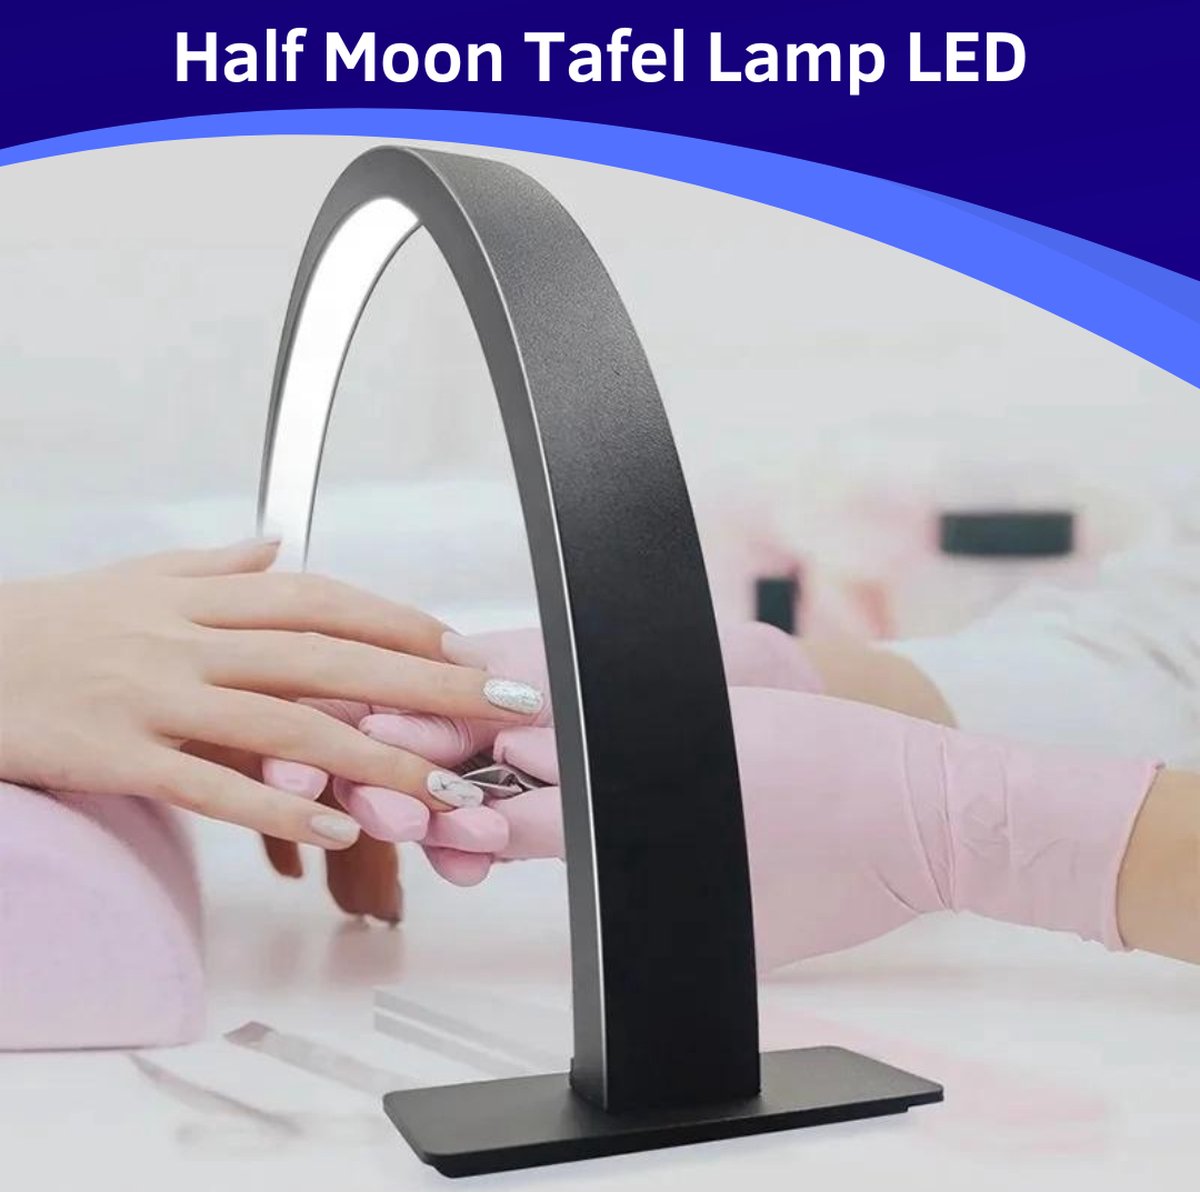 Caedentes - Half Moon Light LED - Nagel salon - Tafellamp - Werklamp - Behandellamp - Beauty - Nagelstyliste - Manicure - Salon Lamp - Beauty Lamp - Wimper Lamp - Lash Lamp - Make Up Lamp - Behandel Lamp - Nagel Lamp Tafel - Caedentes